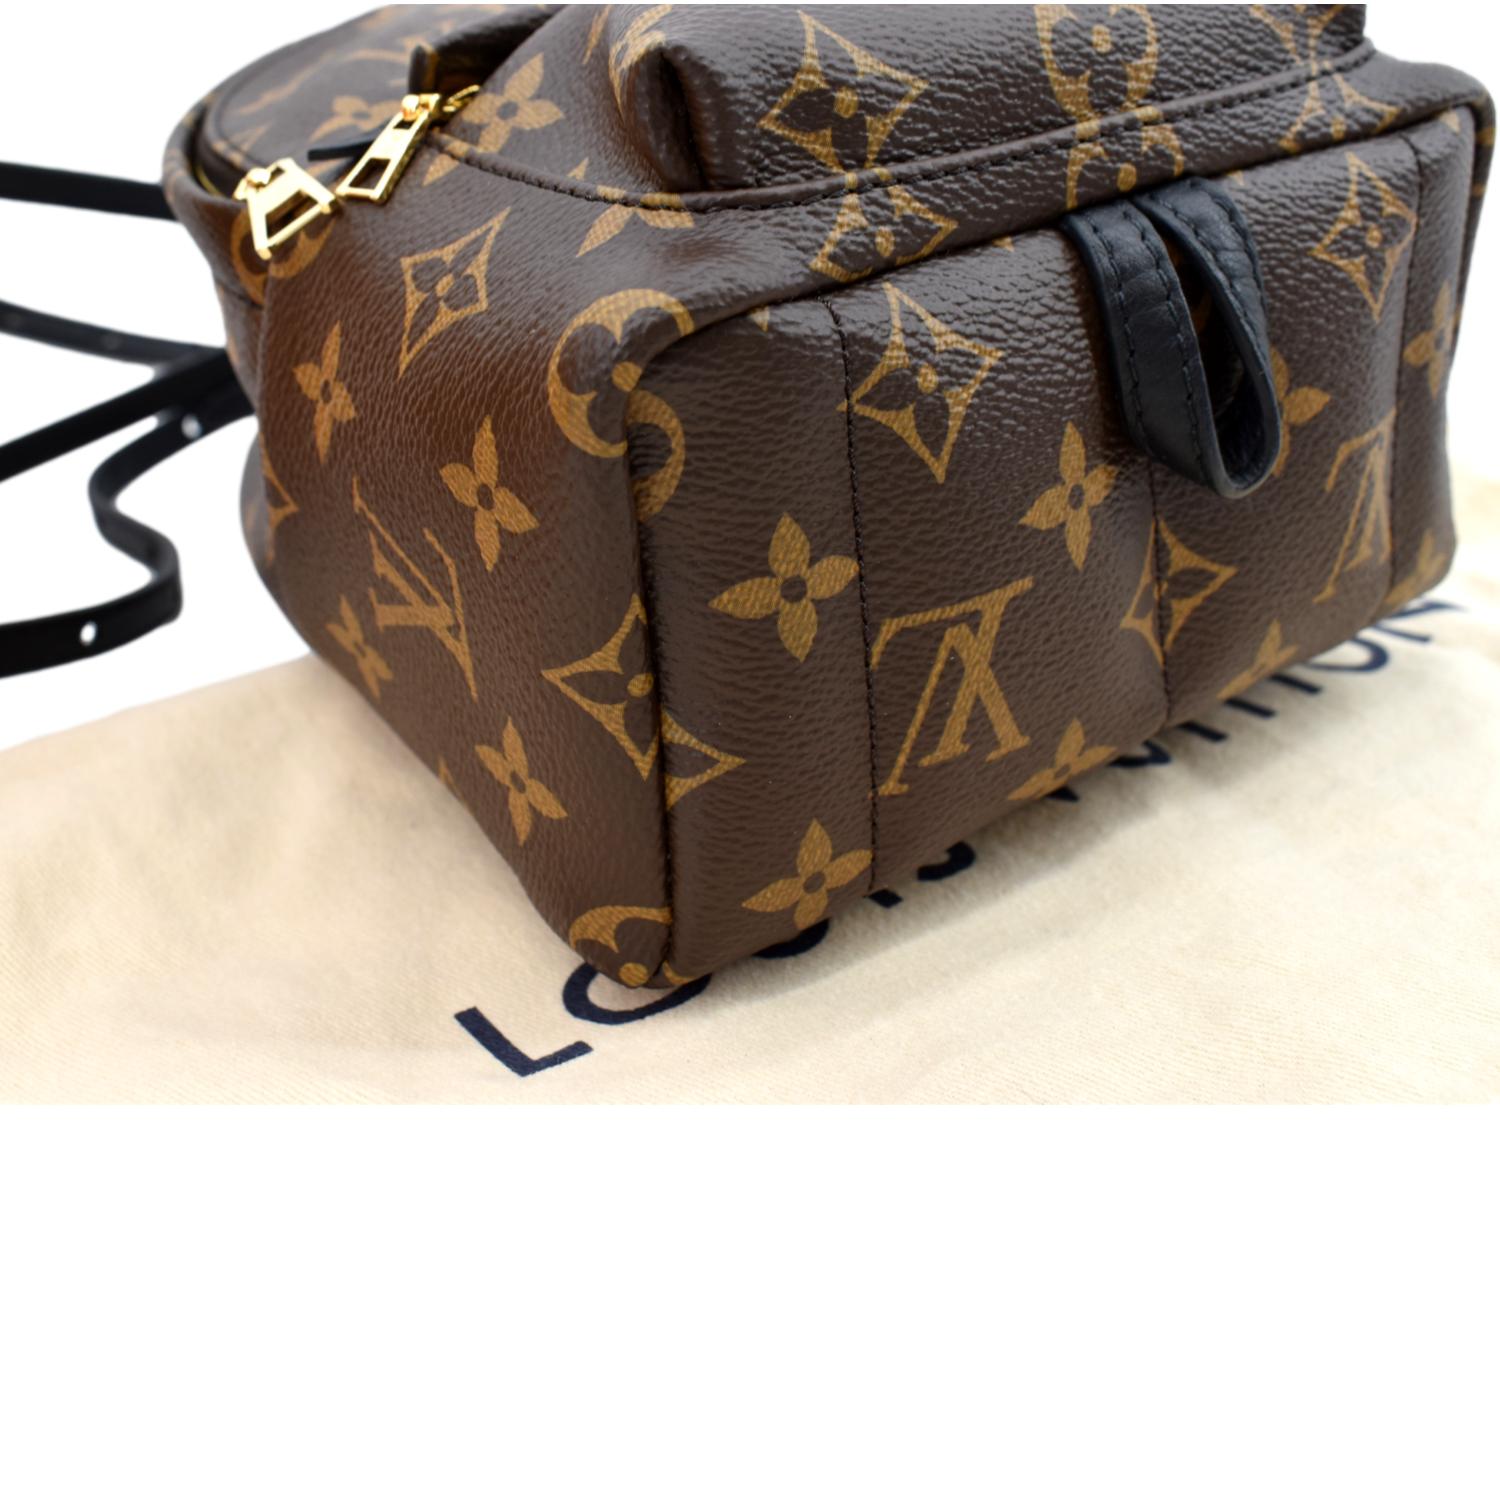 Louis Vuitton, Bags, Louis Vuitton Mini Palm Spring Monogram Backpack